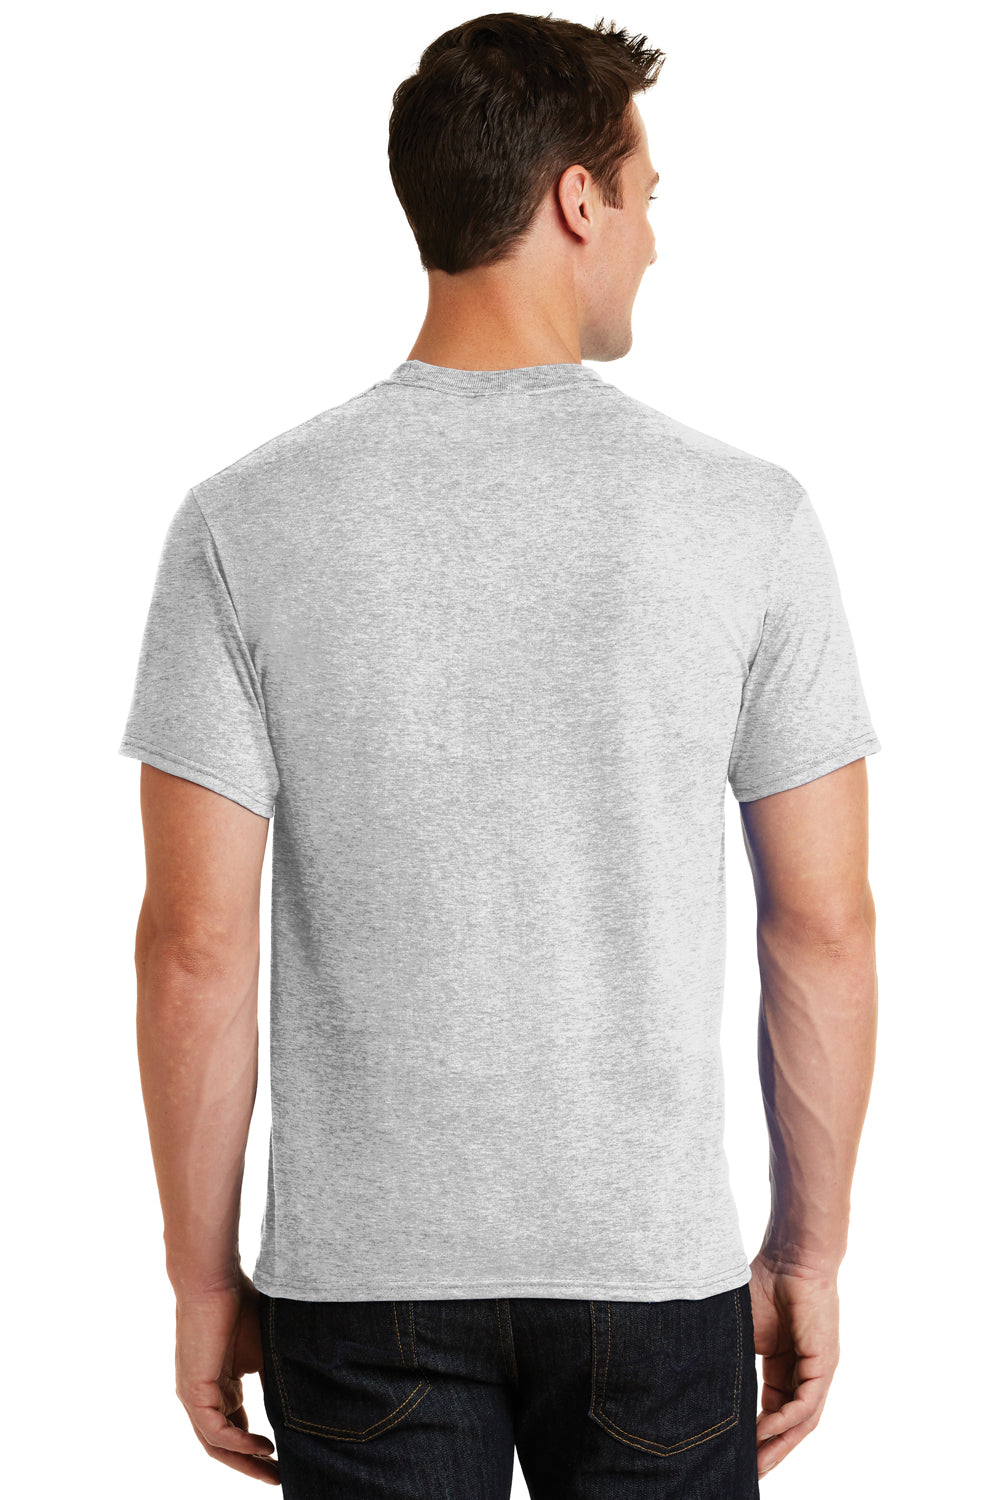 Port & Company PC55 Mens Core Short Sleeve Crewneck T-Shirt Ash Grey Back